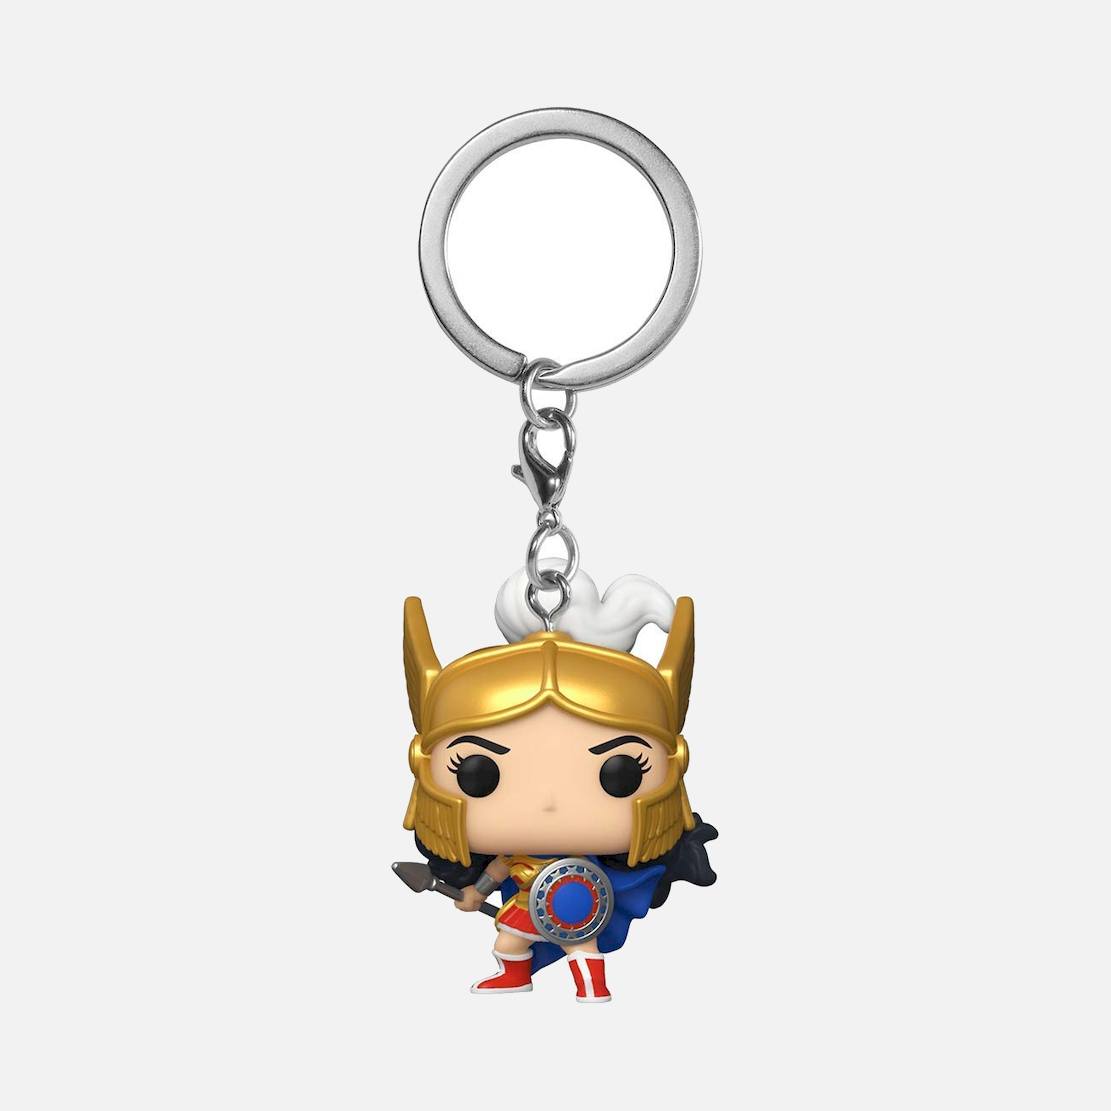 Opened Blind Bag Key Chain Keychain Wonder Woman NEW Hero Clip 